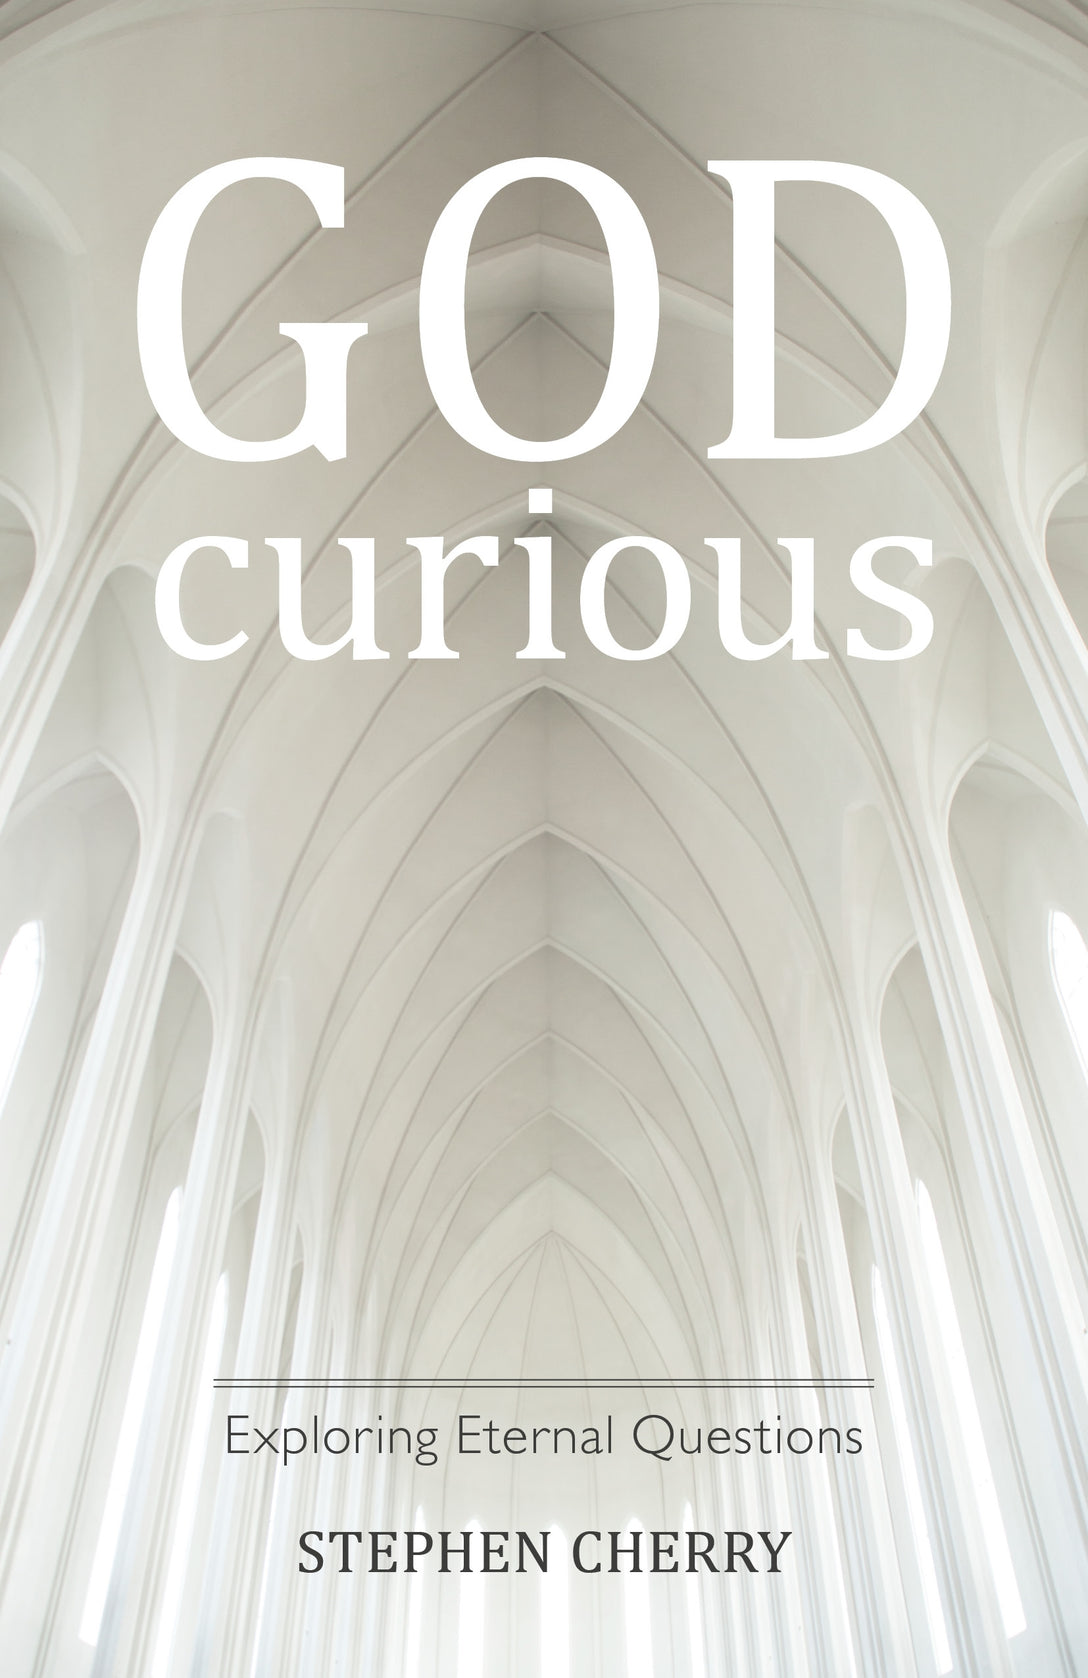 God-Curious by Stephen Cherry